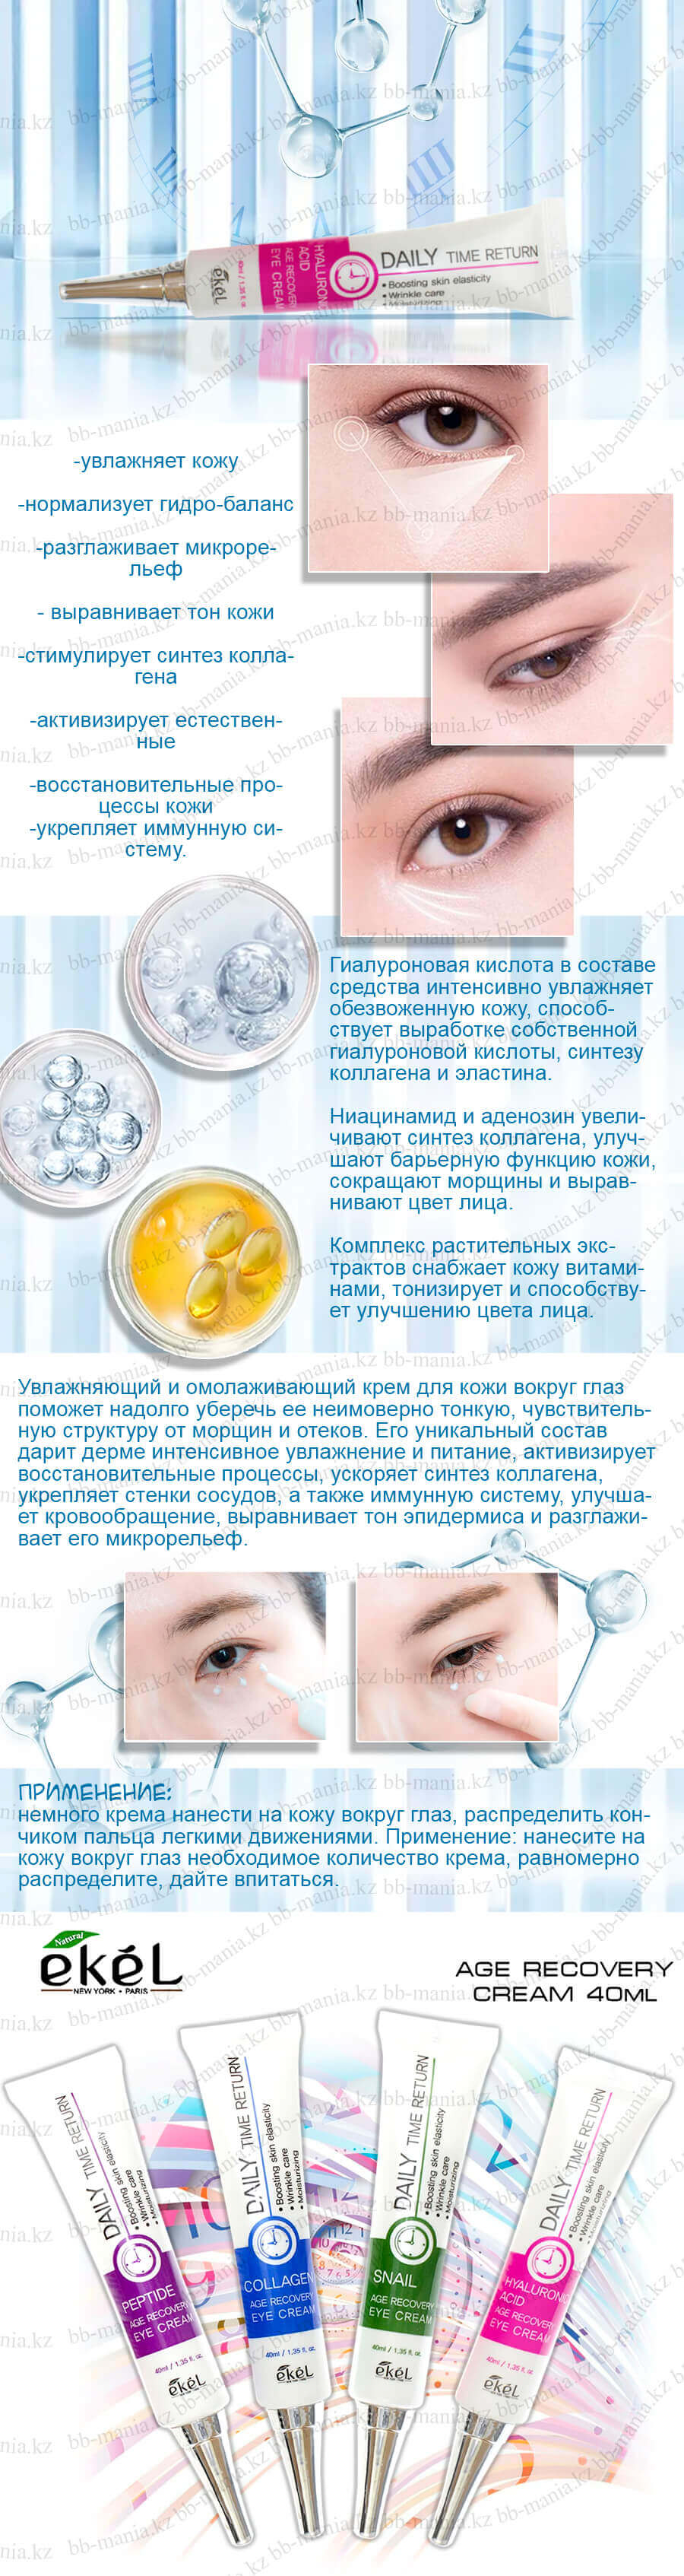 Daily-Time-Return-Age-Recovery-Eye-Cream-Hyaluronic-Acid-[Ekel] (1) (1)